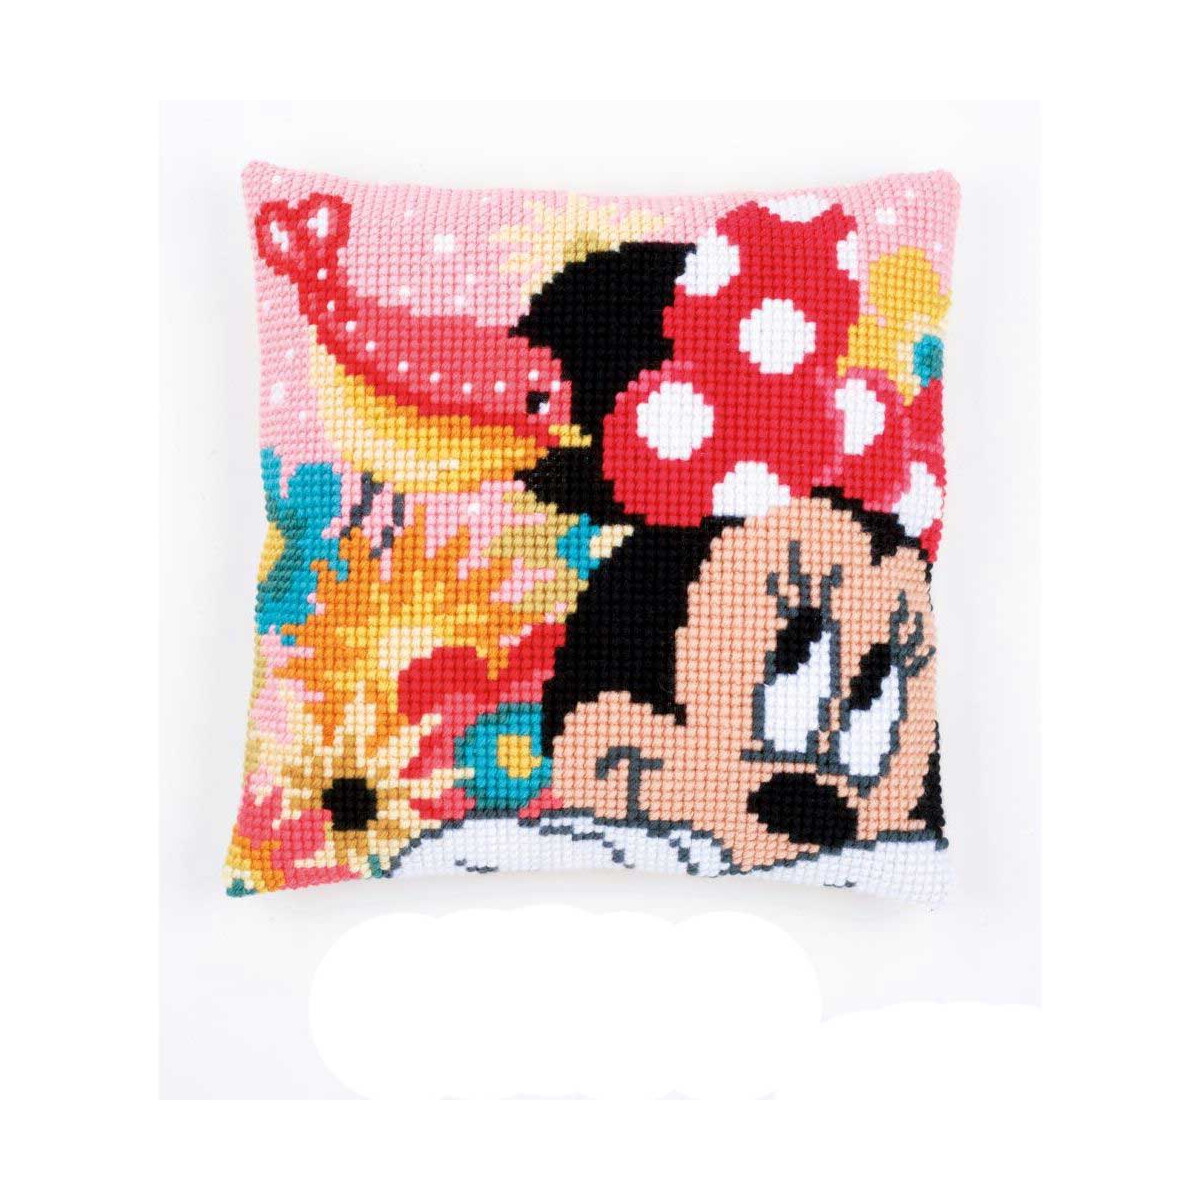 Vervaco Cross stitch kit cushion Disney Minnie has...